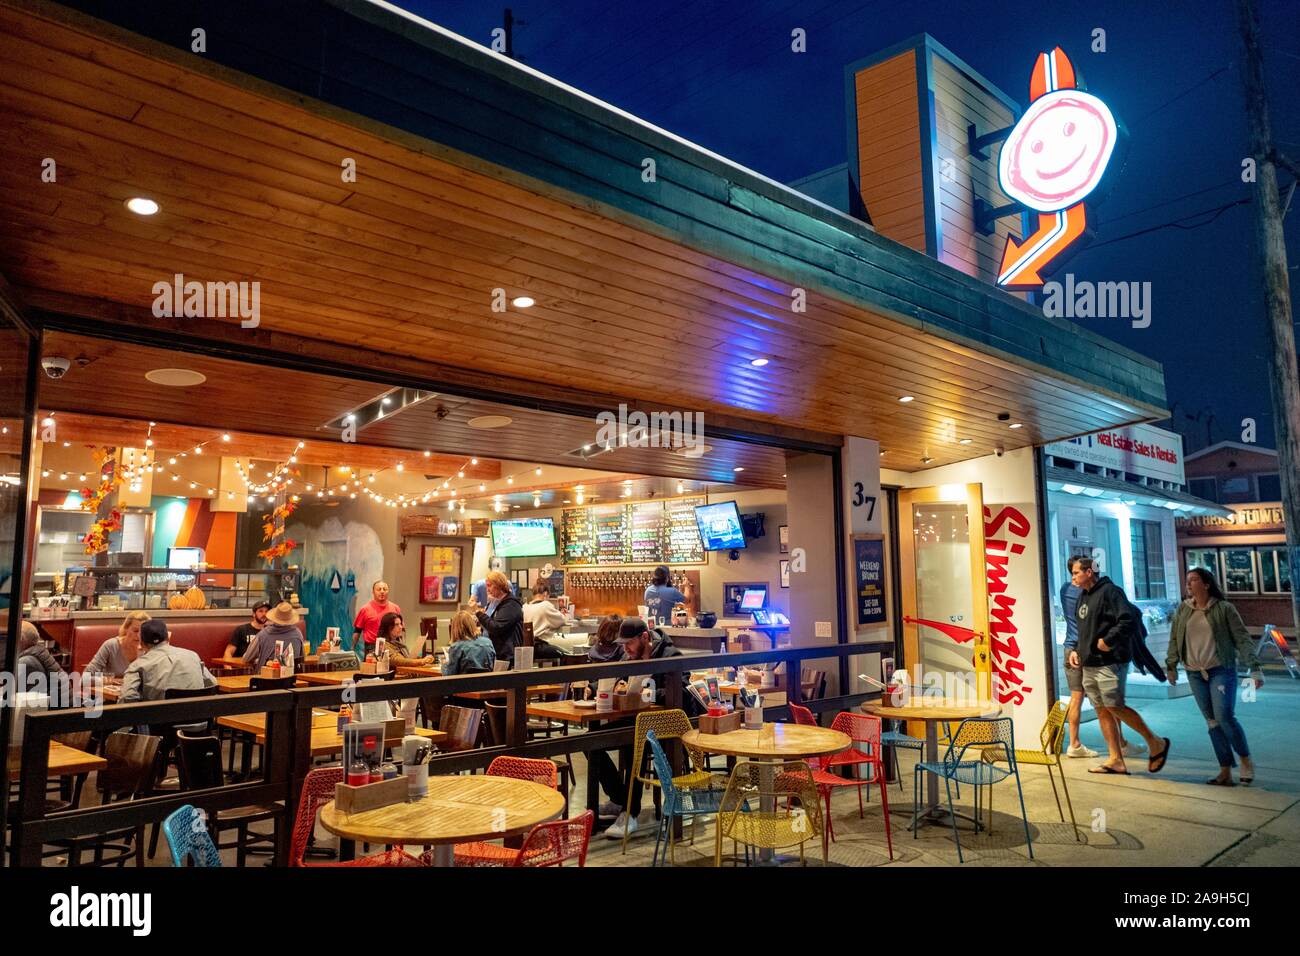 People eat outdoors at Simmzy's restaurant along Washington Blvd, a main road in Venice, Los Angeles, California, October 27, 2019. () Stock Photo